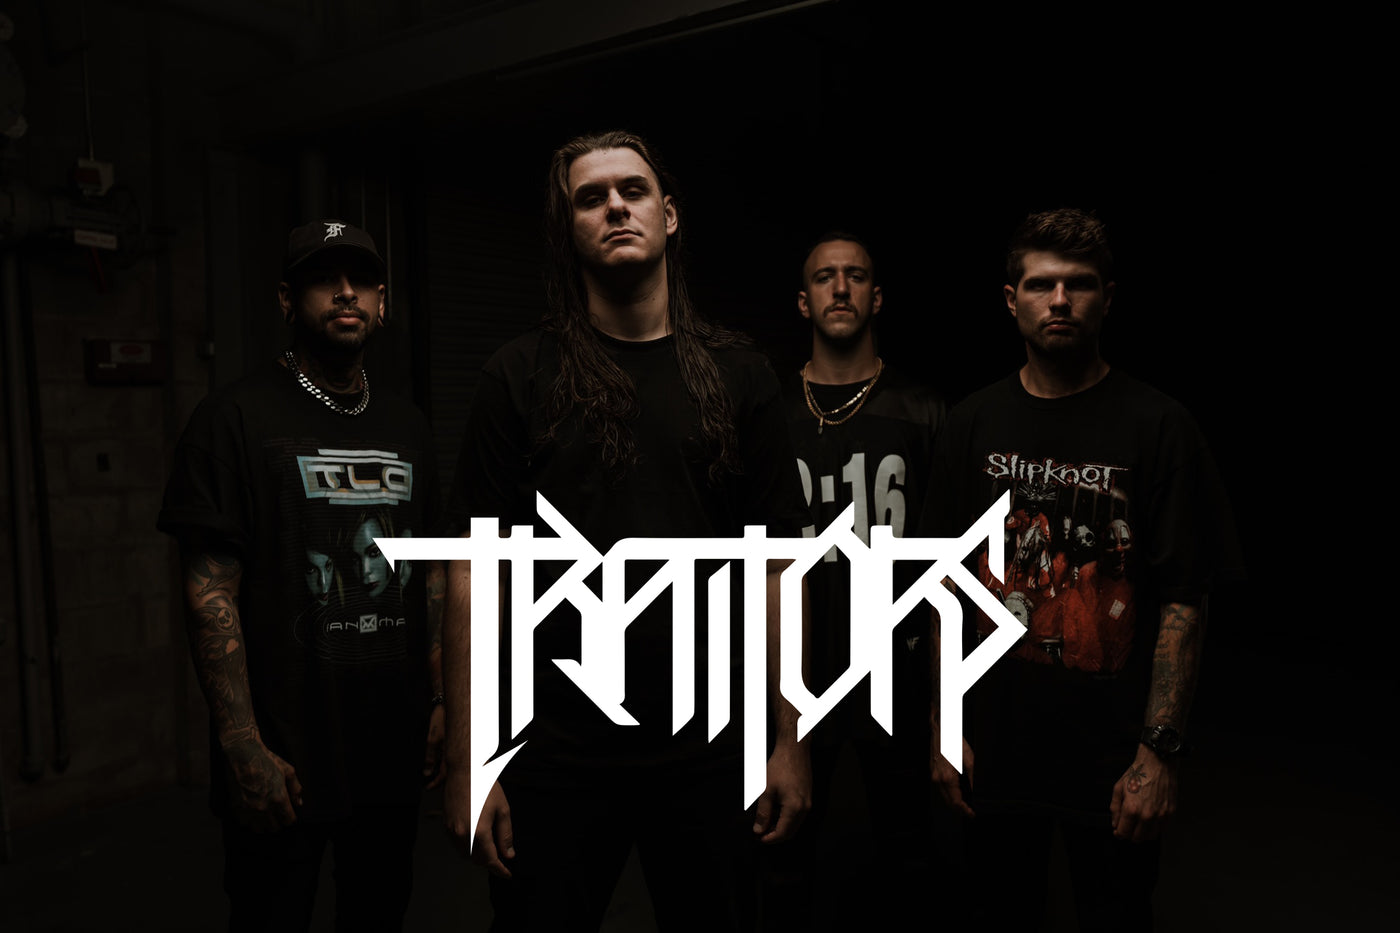 traitors band tour